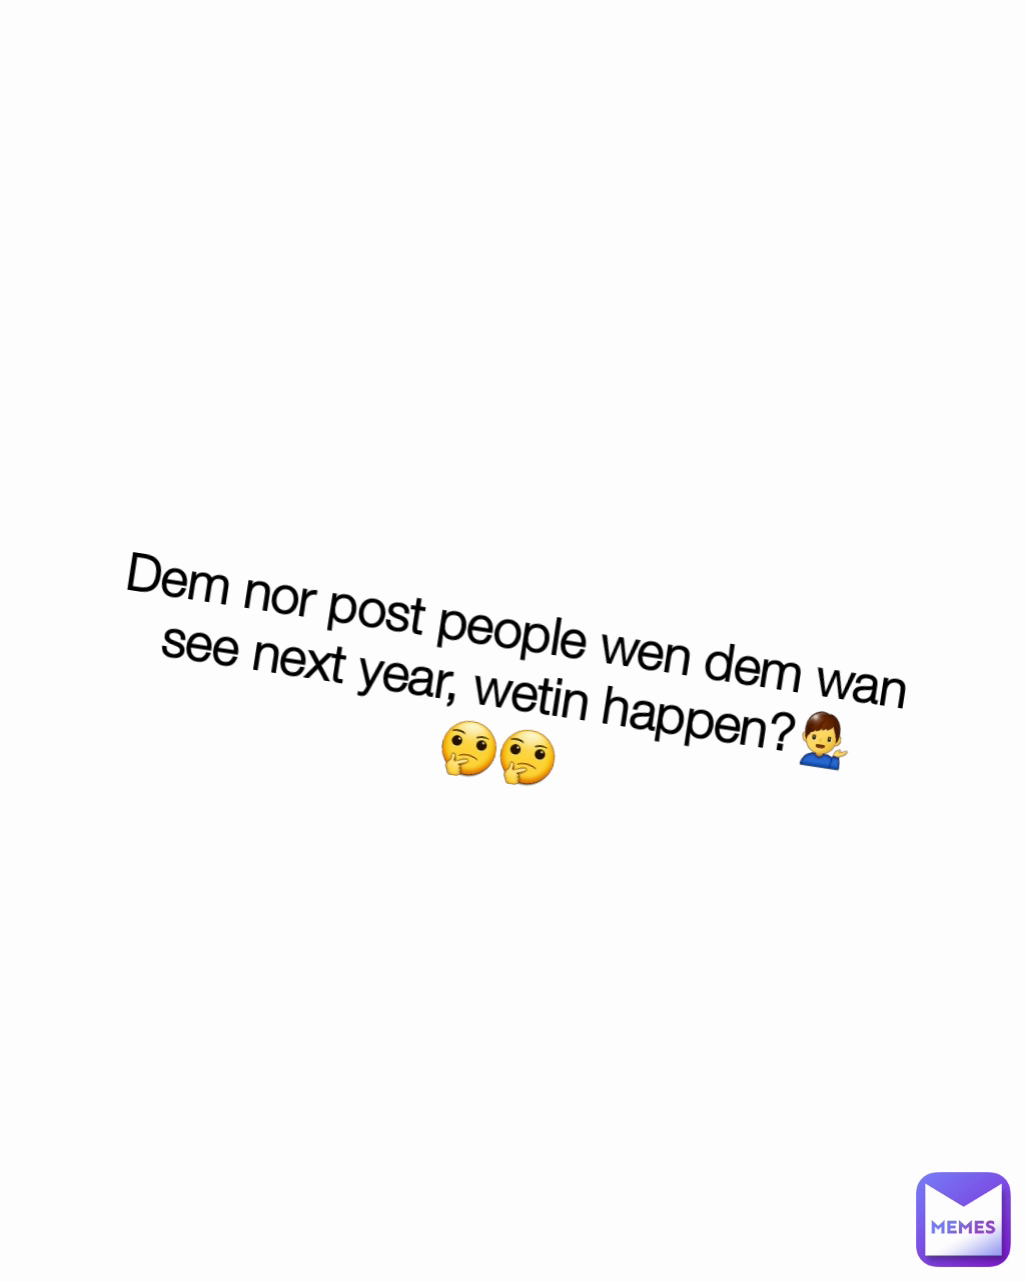 Dem nor post people wen dem wan see next year, wetin happen?💁‍♂️
🤔🤔